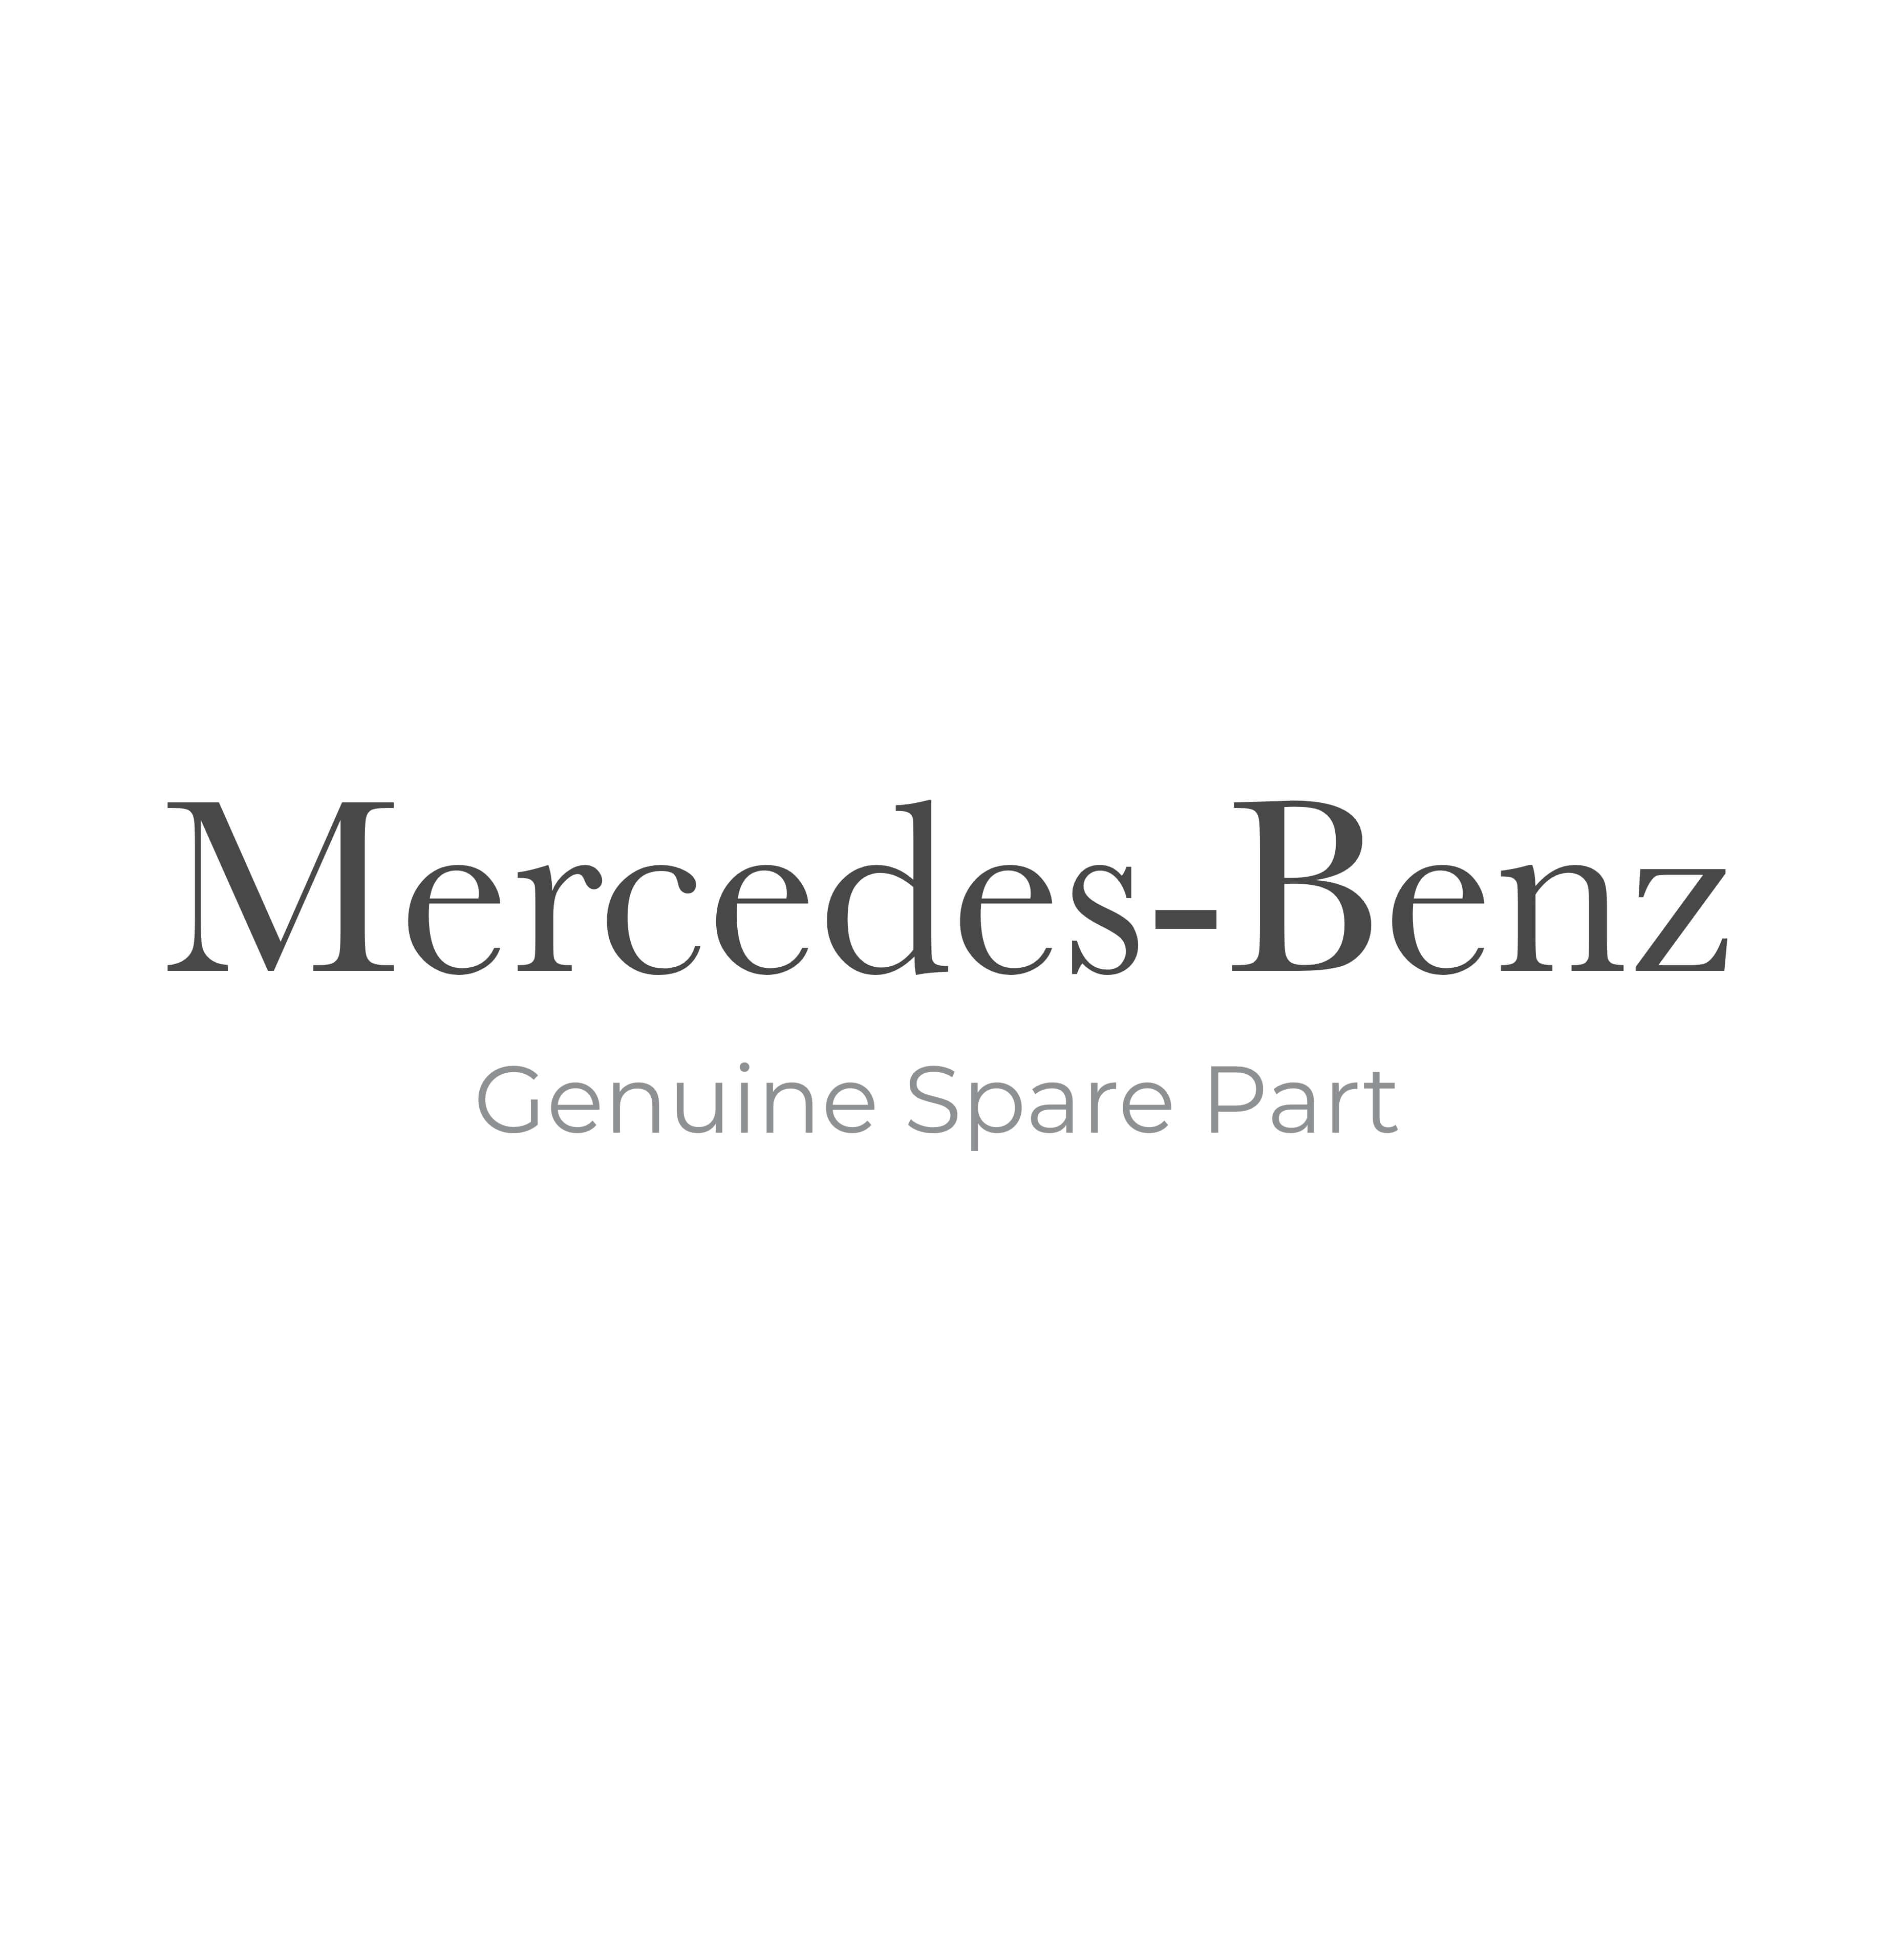 Mercedes-Benz A00046063008R01 Genuine